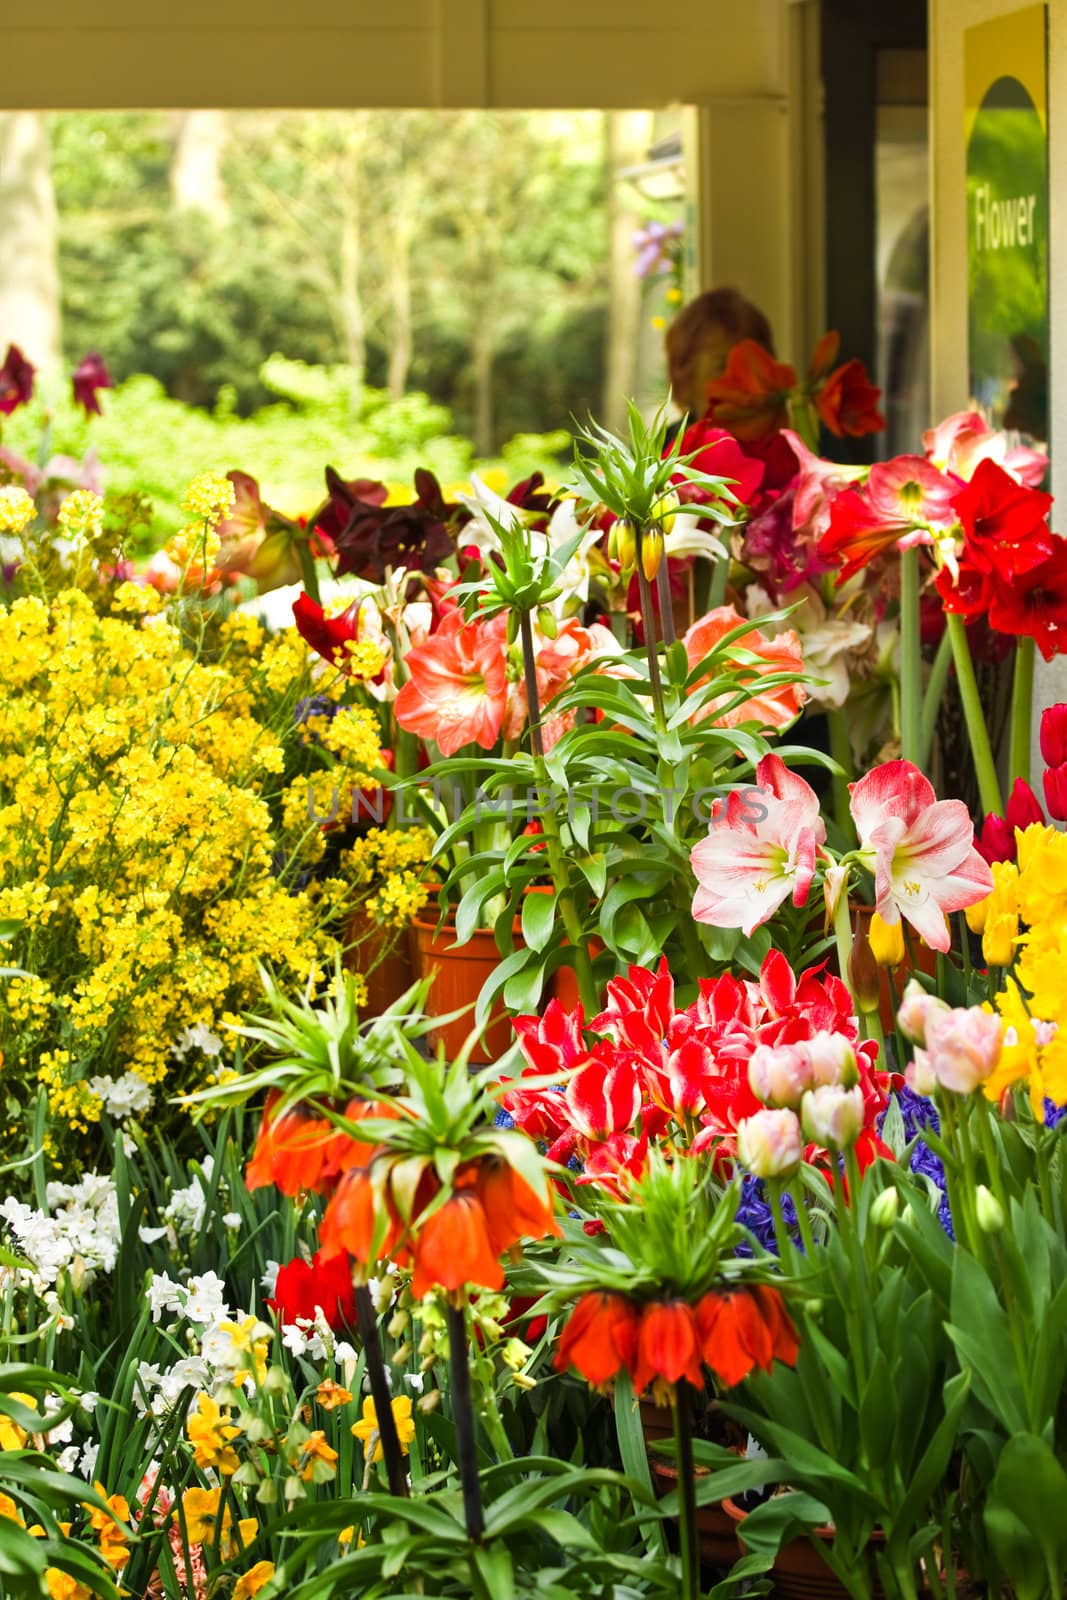 Flower shop in spring by Colette